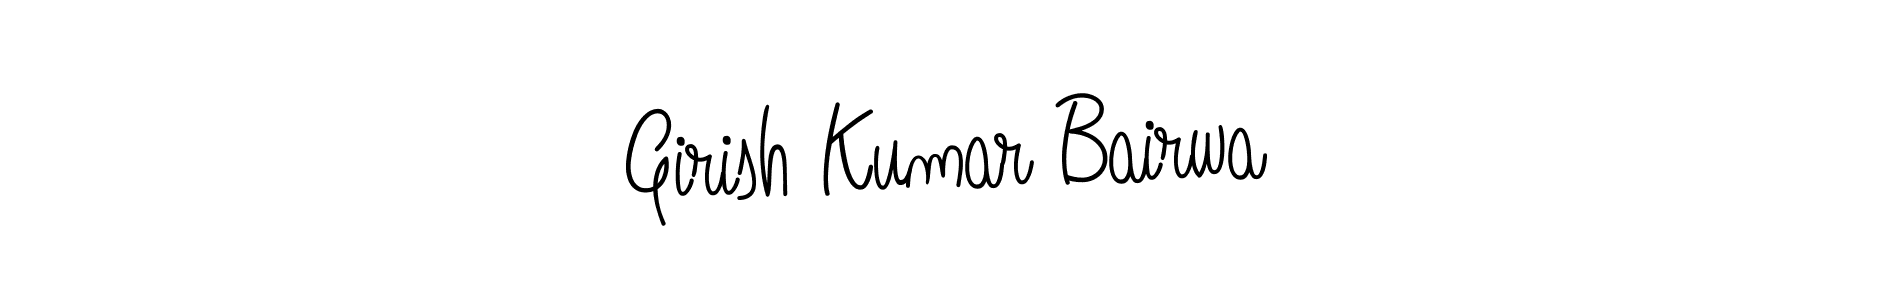 Make a beautiful signature design for name Girish Kumar Bairwa. Use this online signature maker to create a handwritten signature for free. Girish Kumar Bairwa signature style 5 images and pictures png